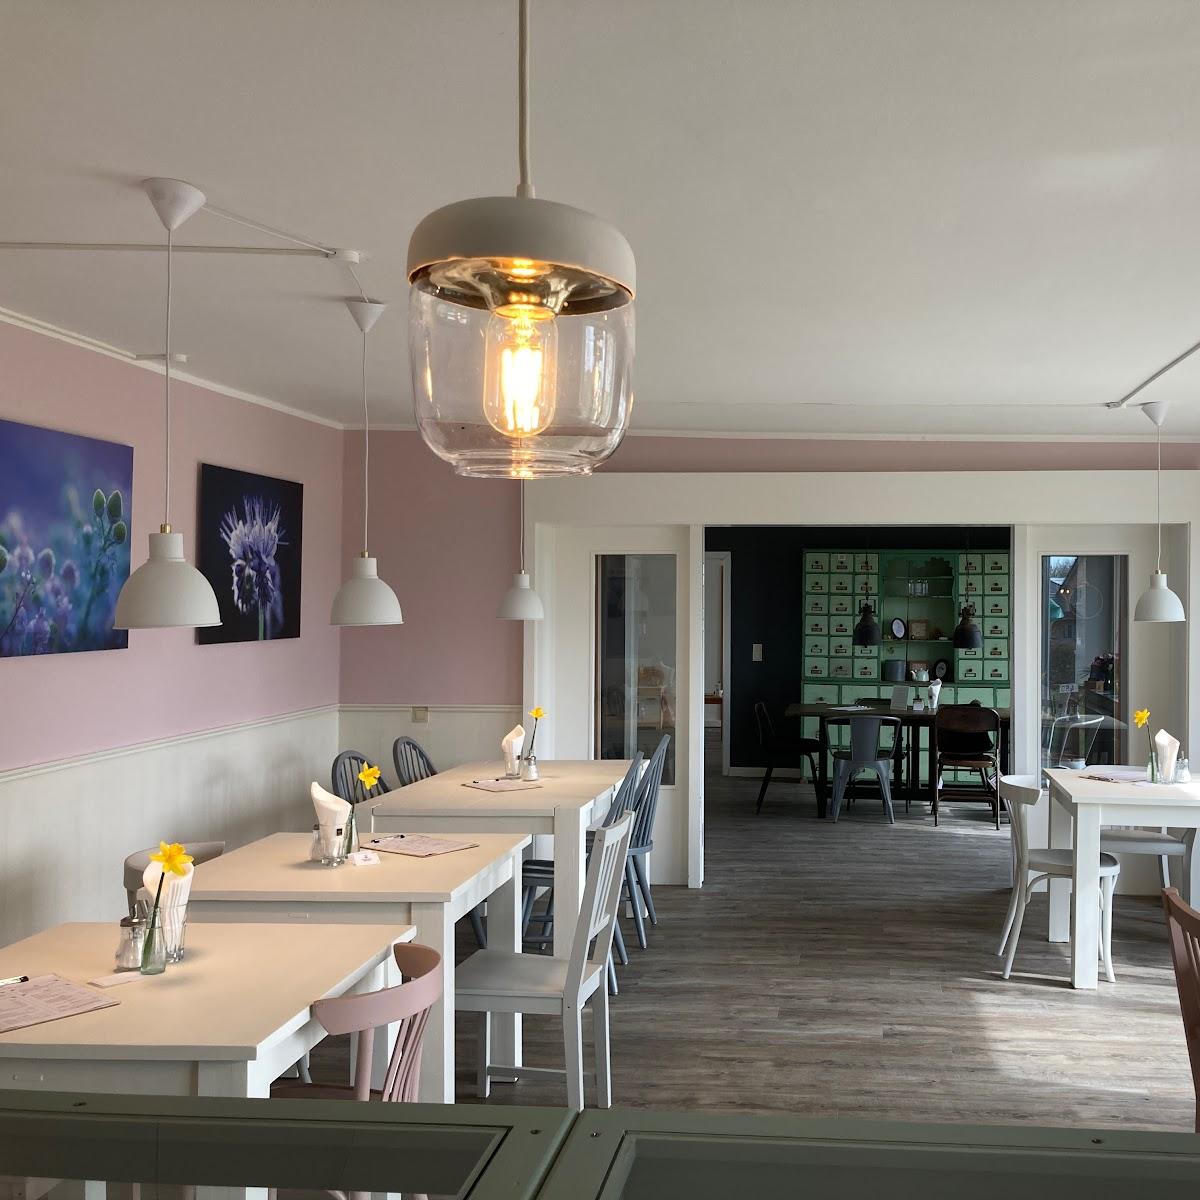 Restaurant "Café Rosengarten" in Pellworm